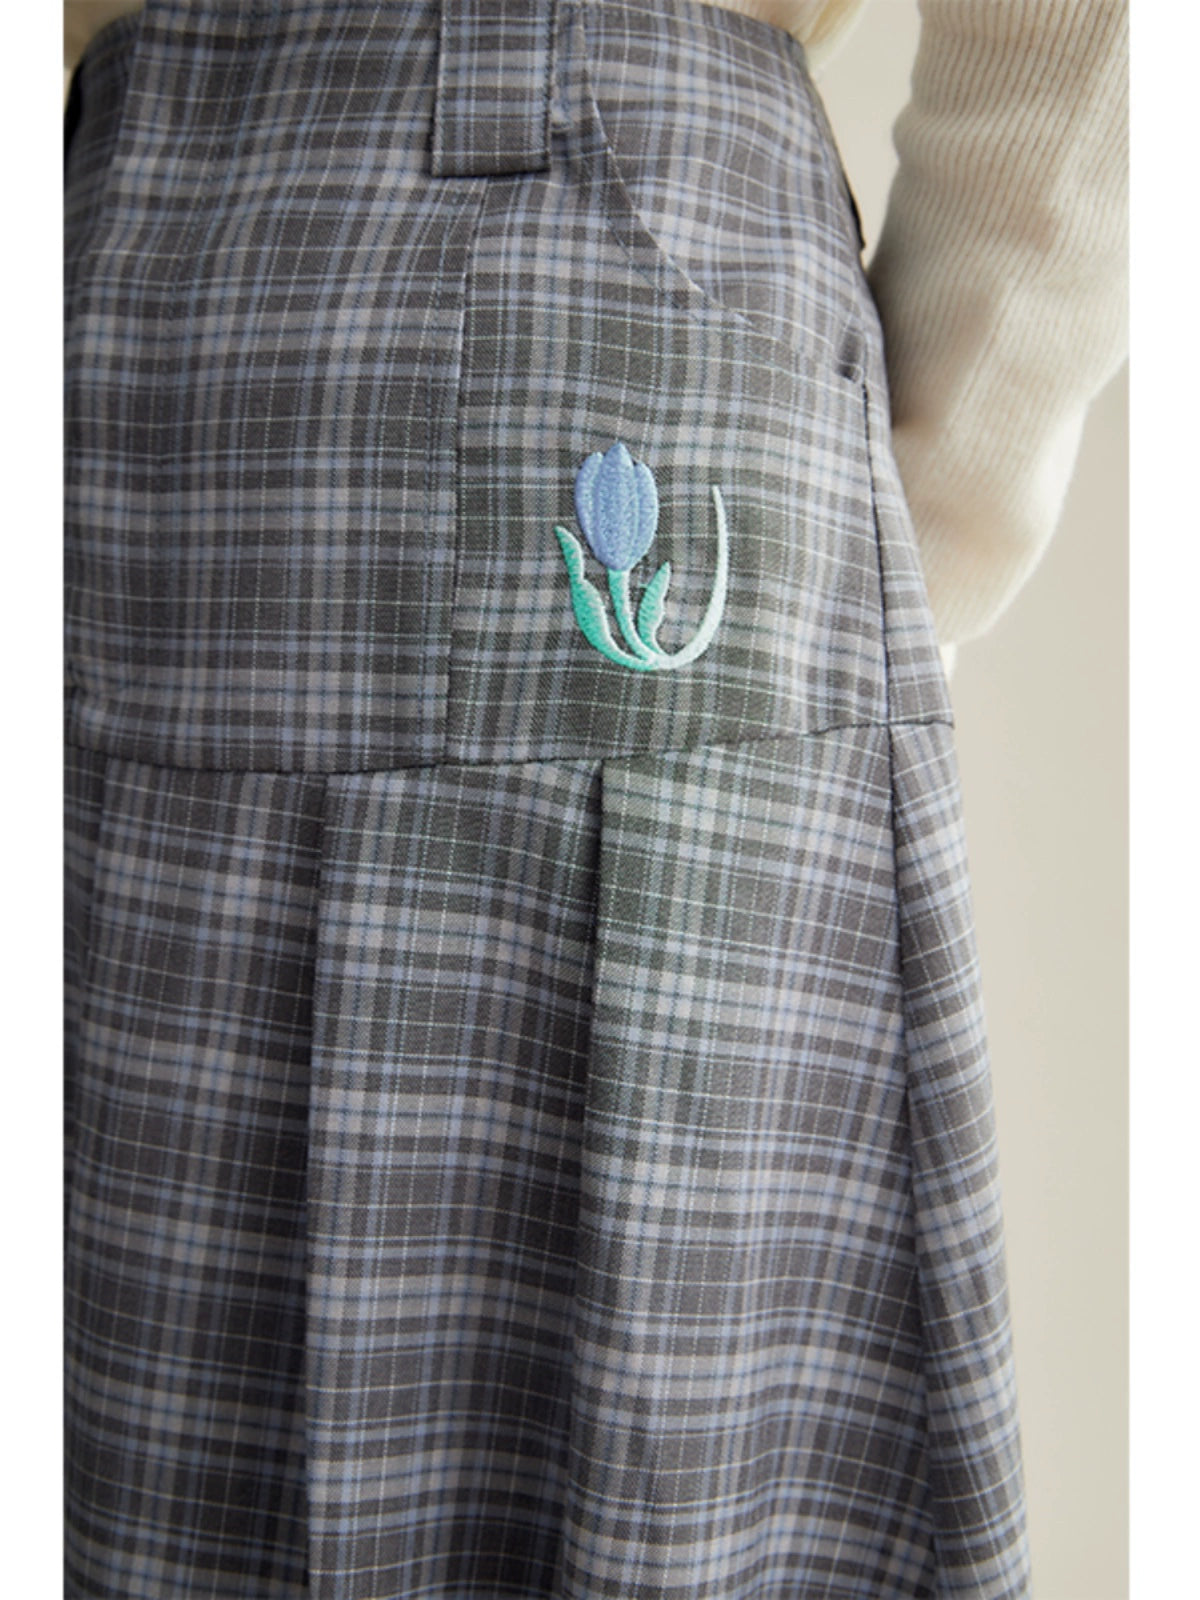 Vivian Letter Grey Blue Checked Tulip Embroidered Pleated Skirt Half length Skirt